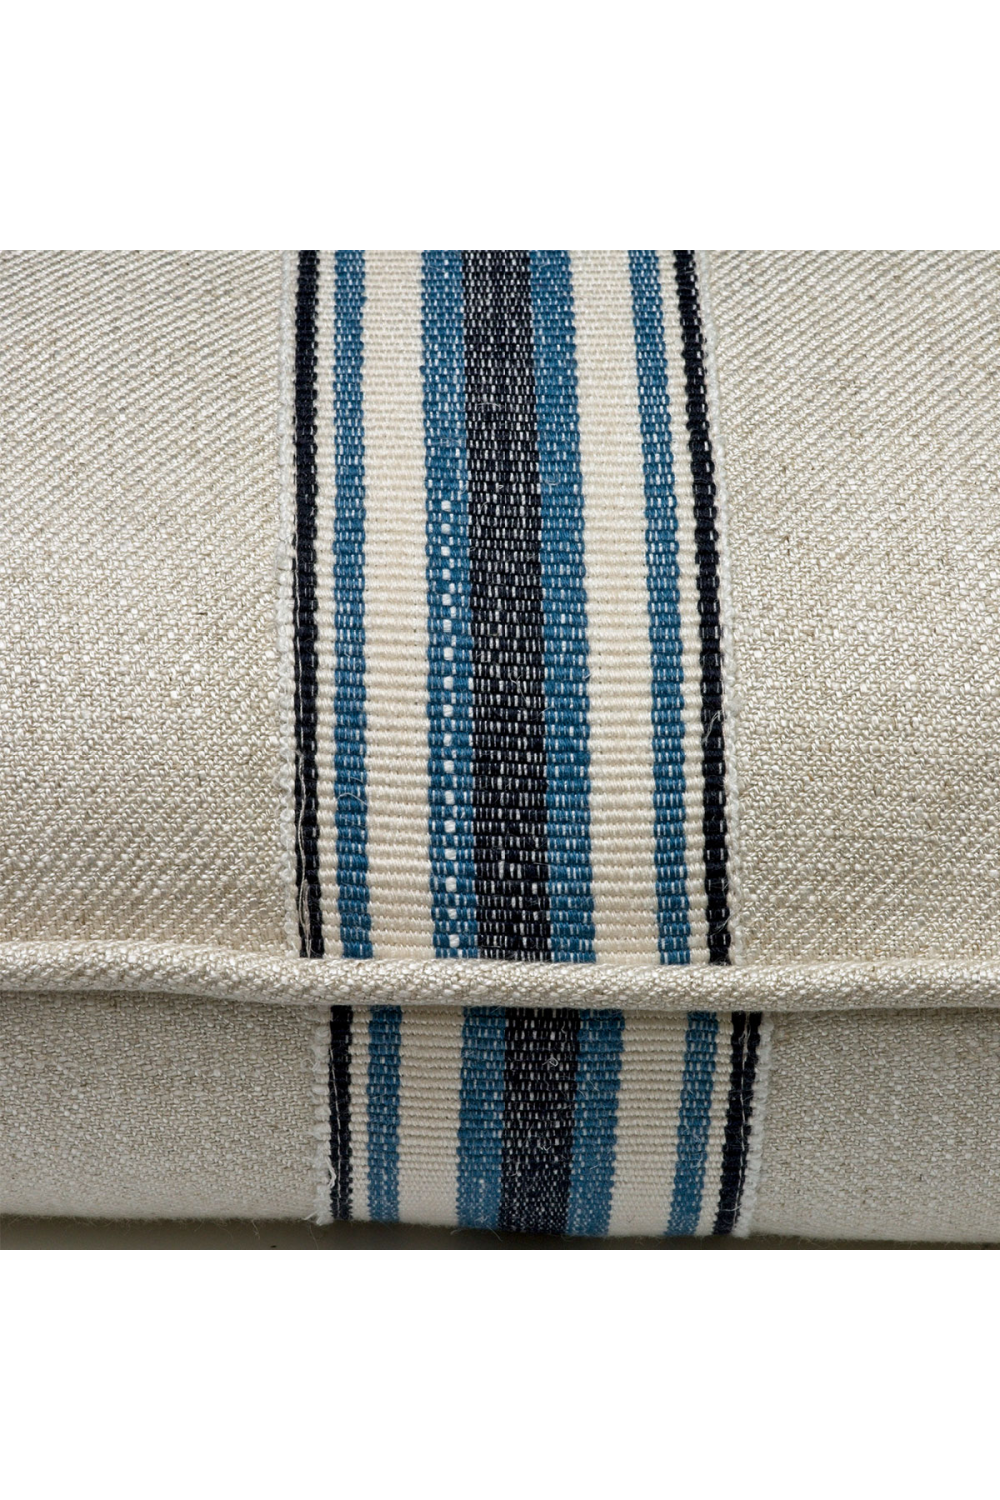 Woven Medal Striped Linen Cushion | Andrew Martin Hedgerow | OROA